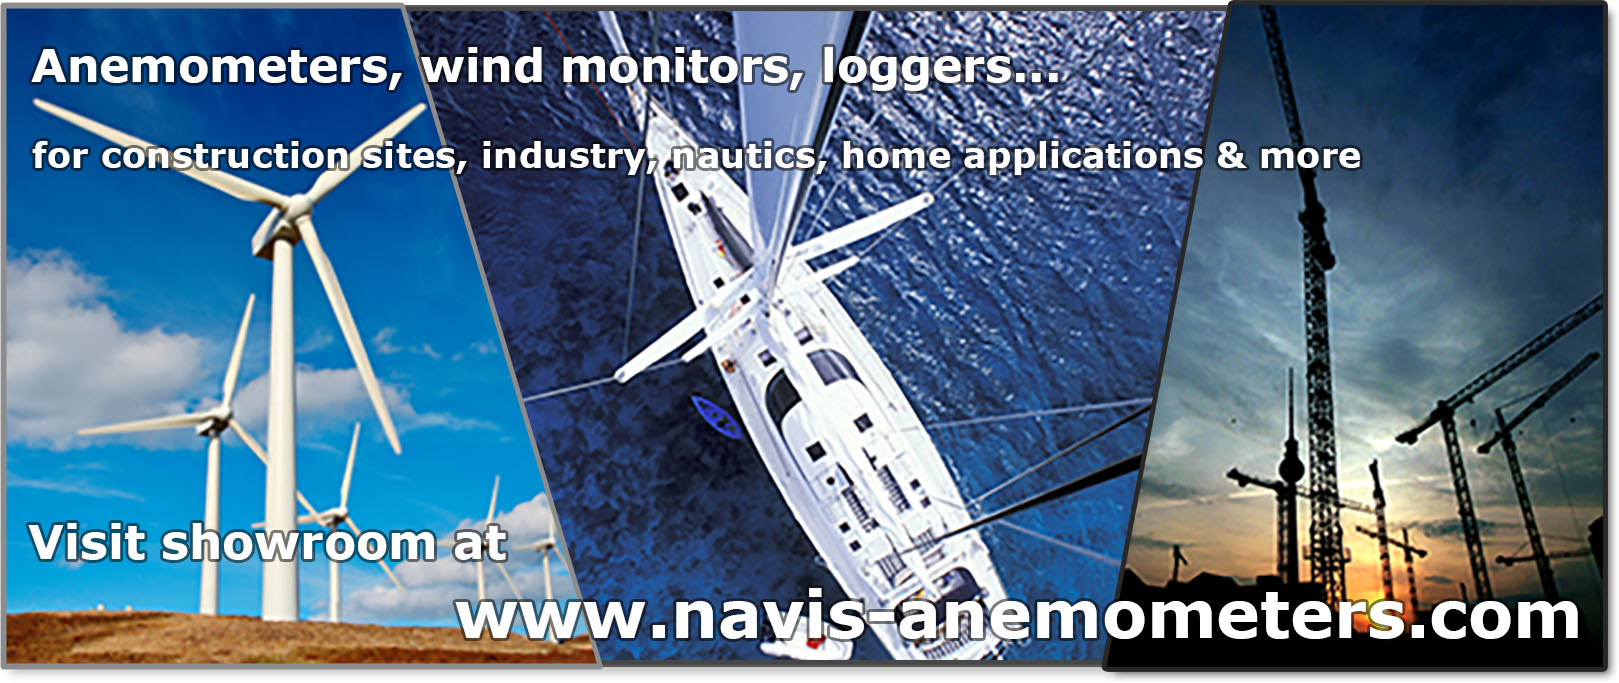 Link to www.navis-anemometers.com